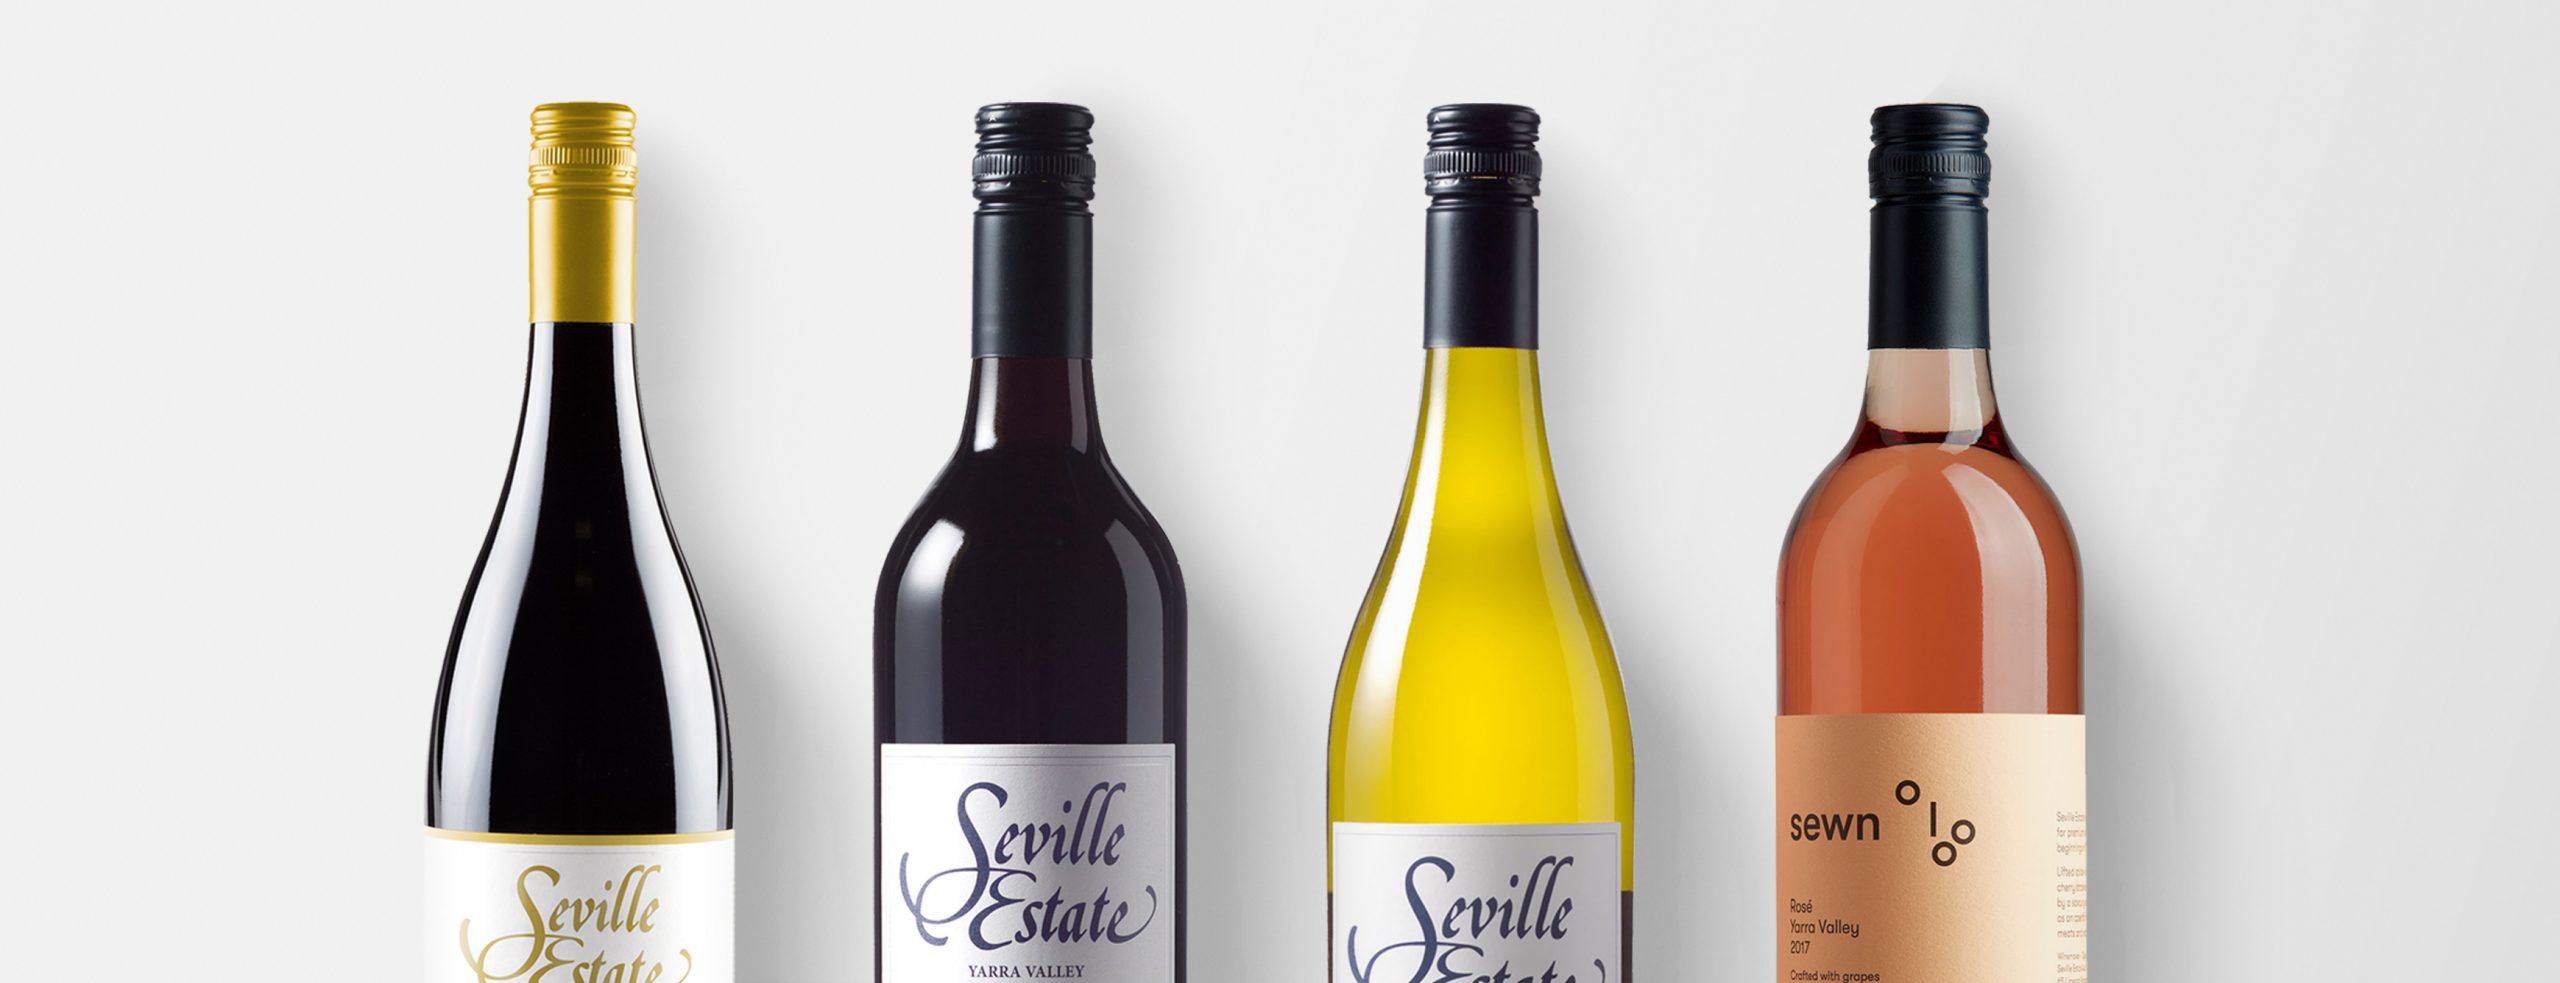 Seville Estate Wine Range